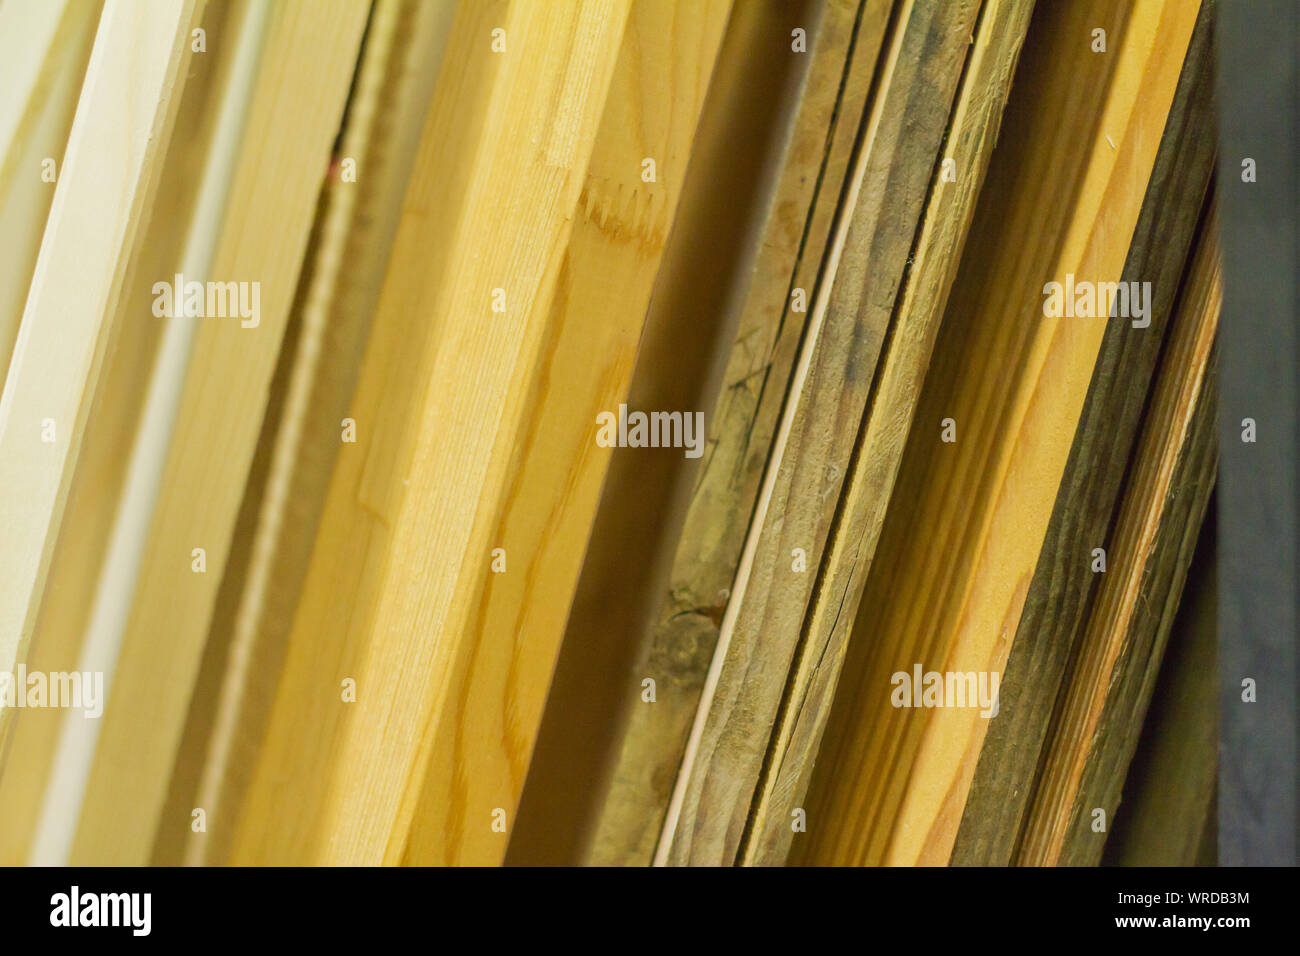 Holzlatten in Werkstatt Holz Nadelholz Kiefer Kiefernholz leisten Schreiner Tischler Stockfoto